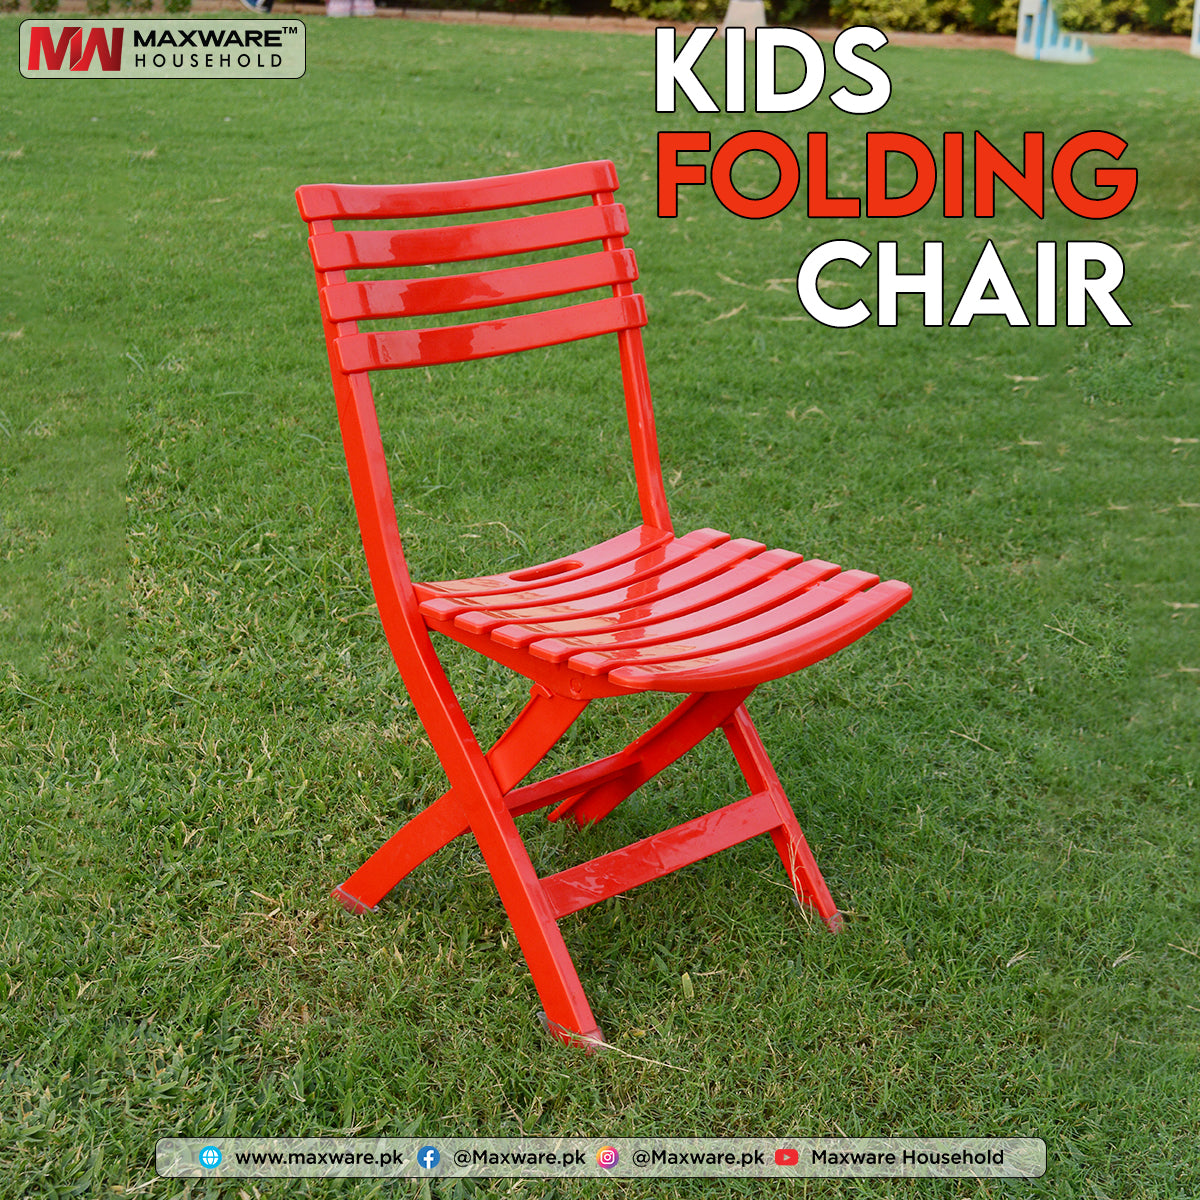 Kids Folding Chair - Maxwaremart